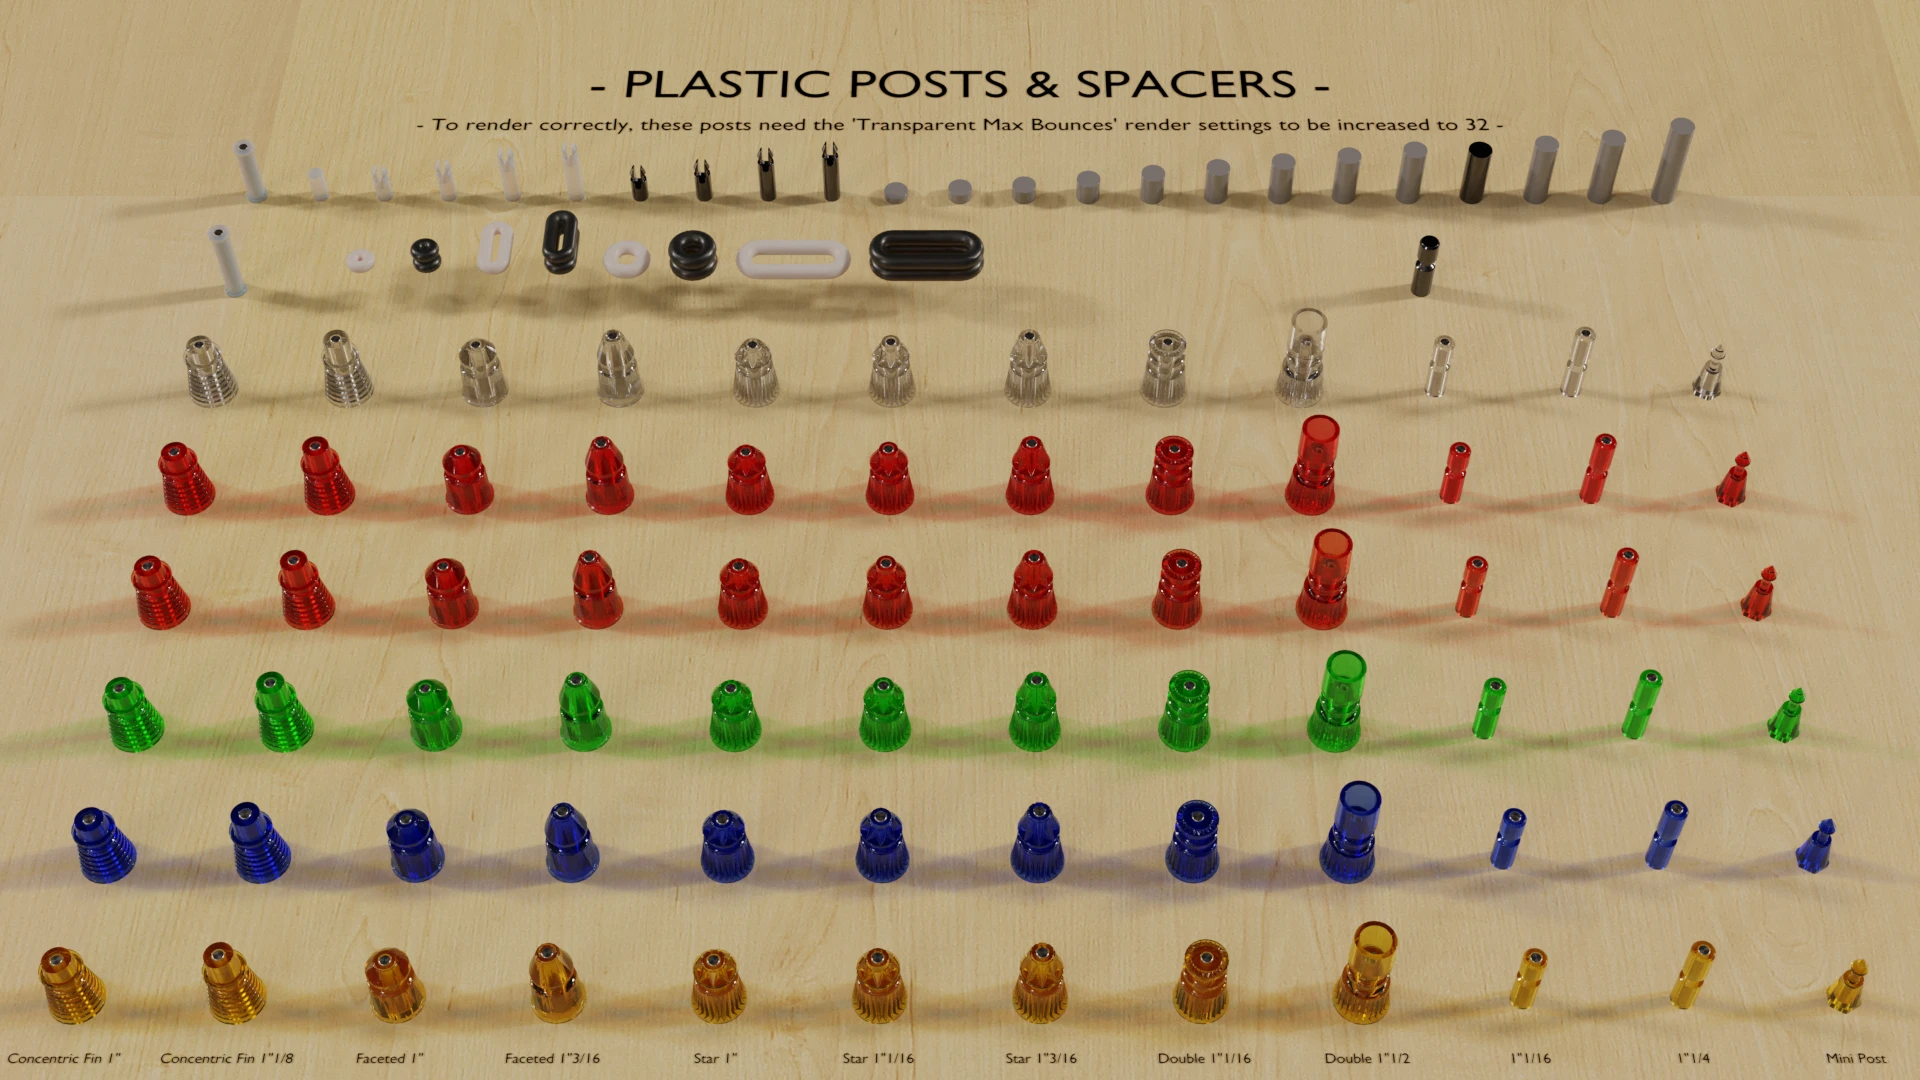 Plastic posts